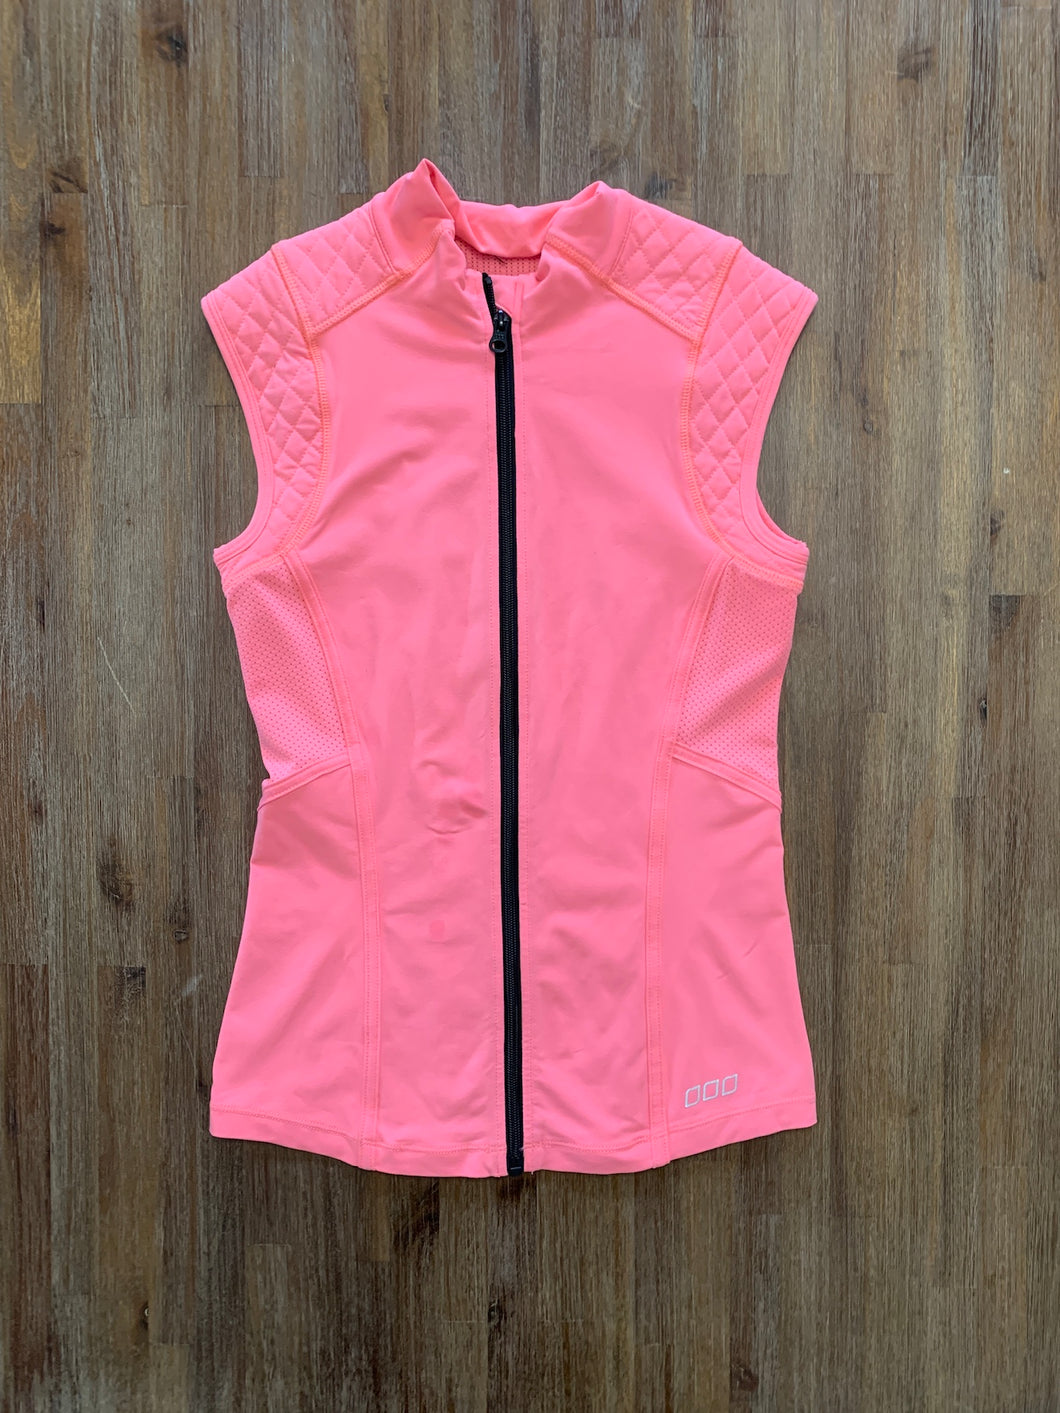 LORNA JANE Size XS Sleeveless Jacket in Salmon Pink Women's